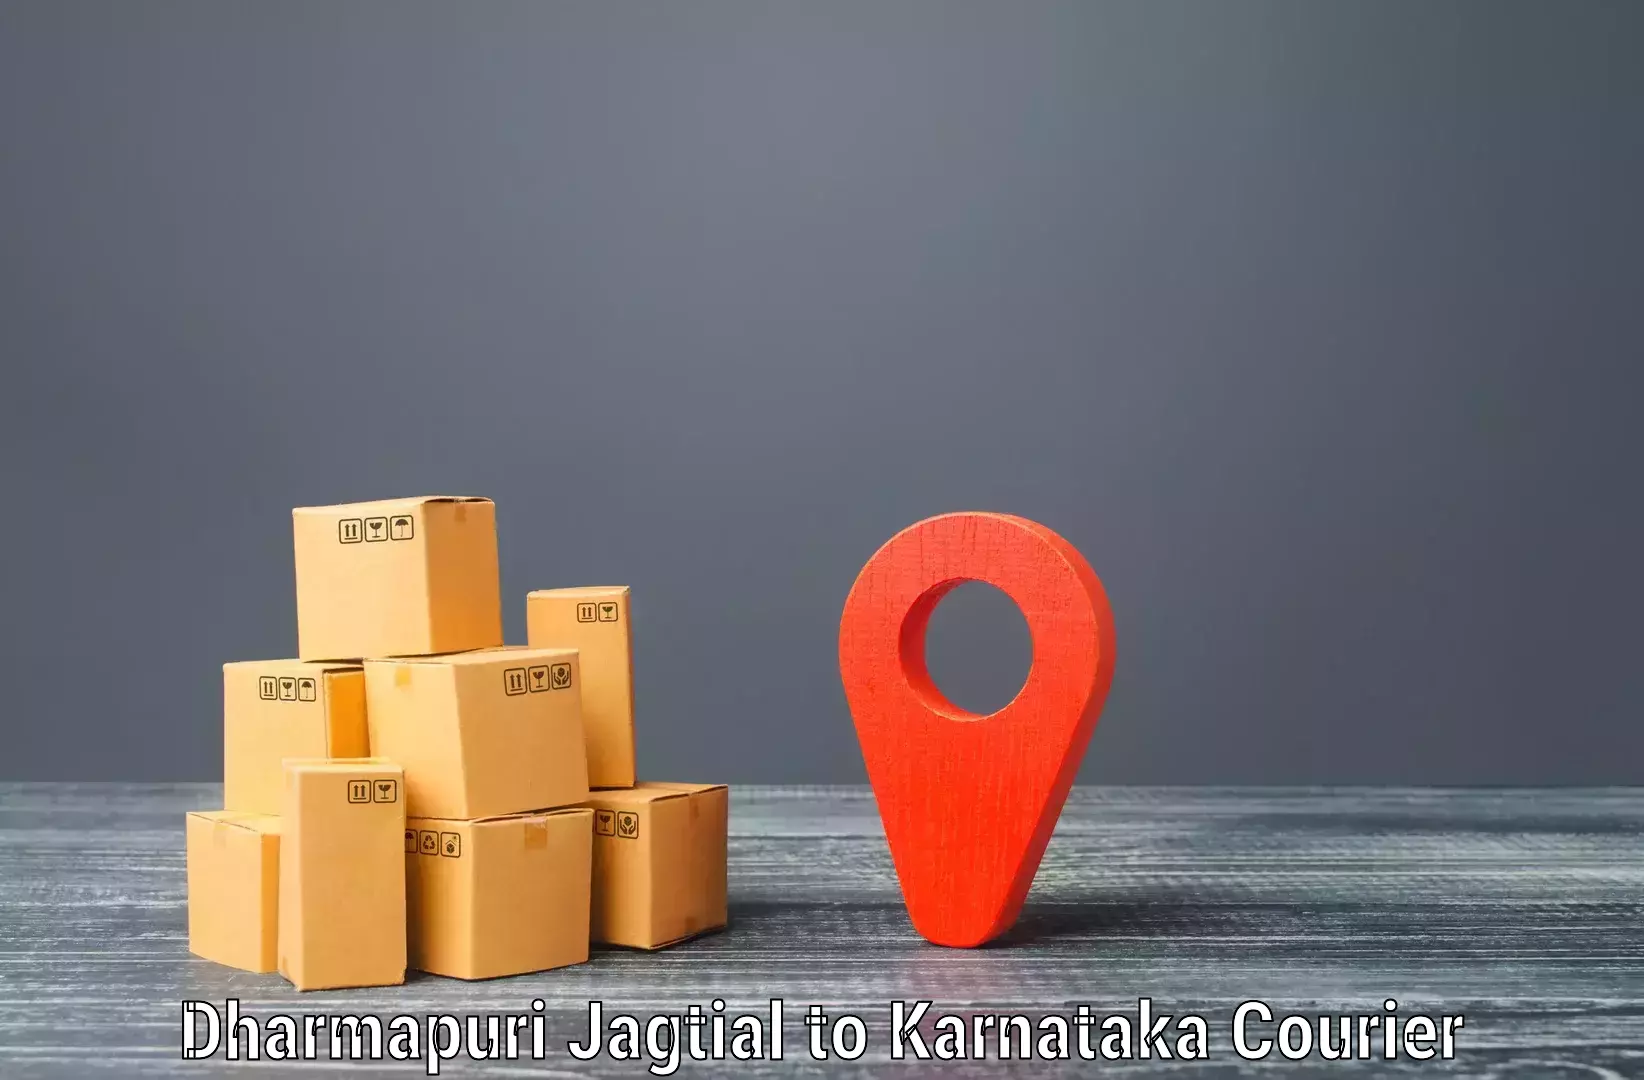 Quality courier partnerships Dharmapuri Jagtial to Belagavi